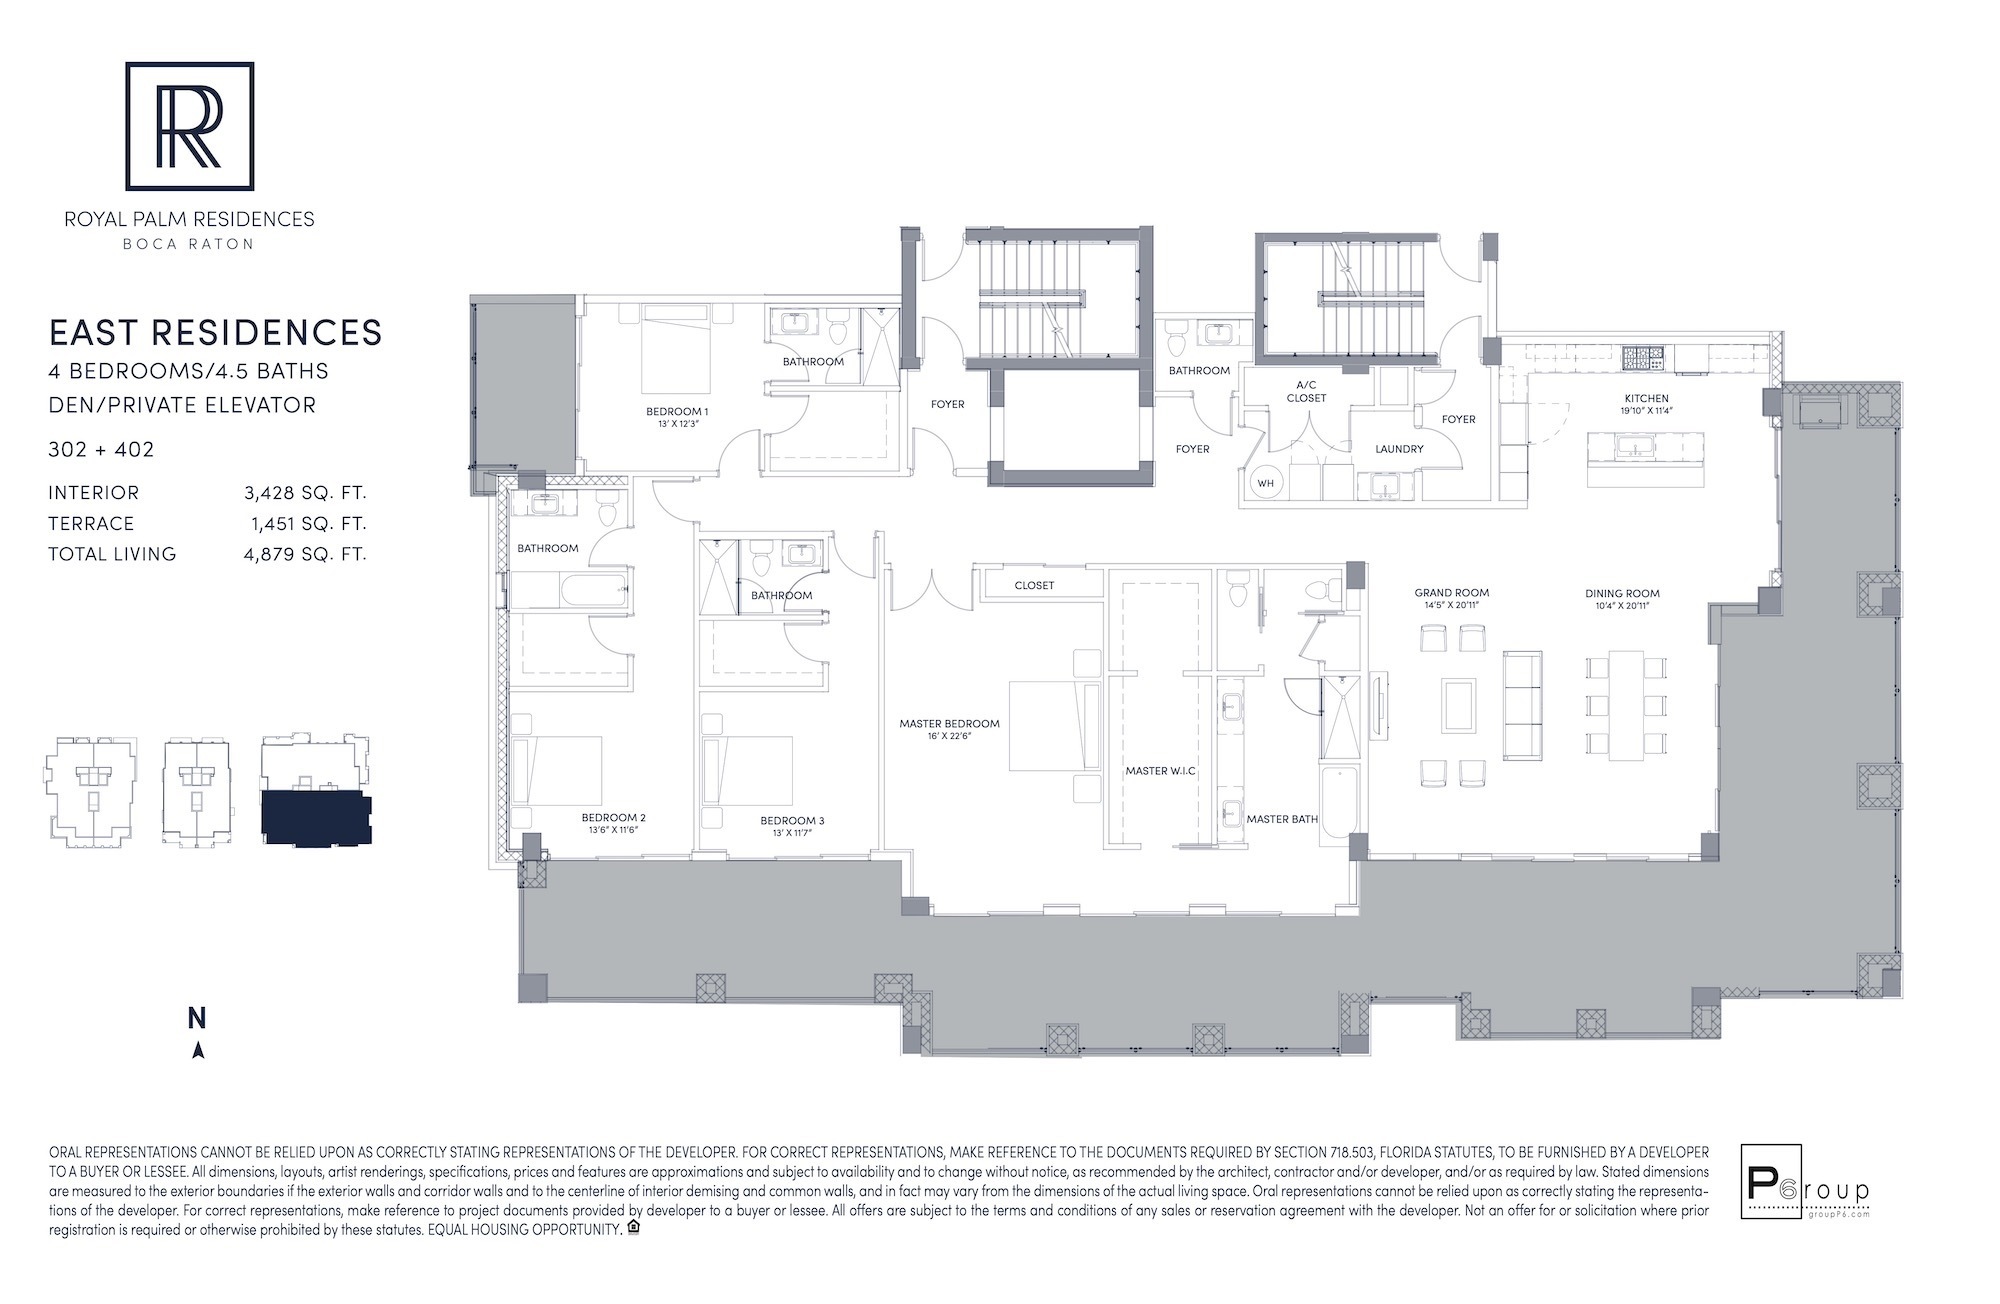 Floor Plan for Royal Palm Residences Floorplans, East Residences 302 + 402